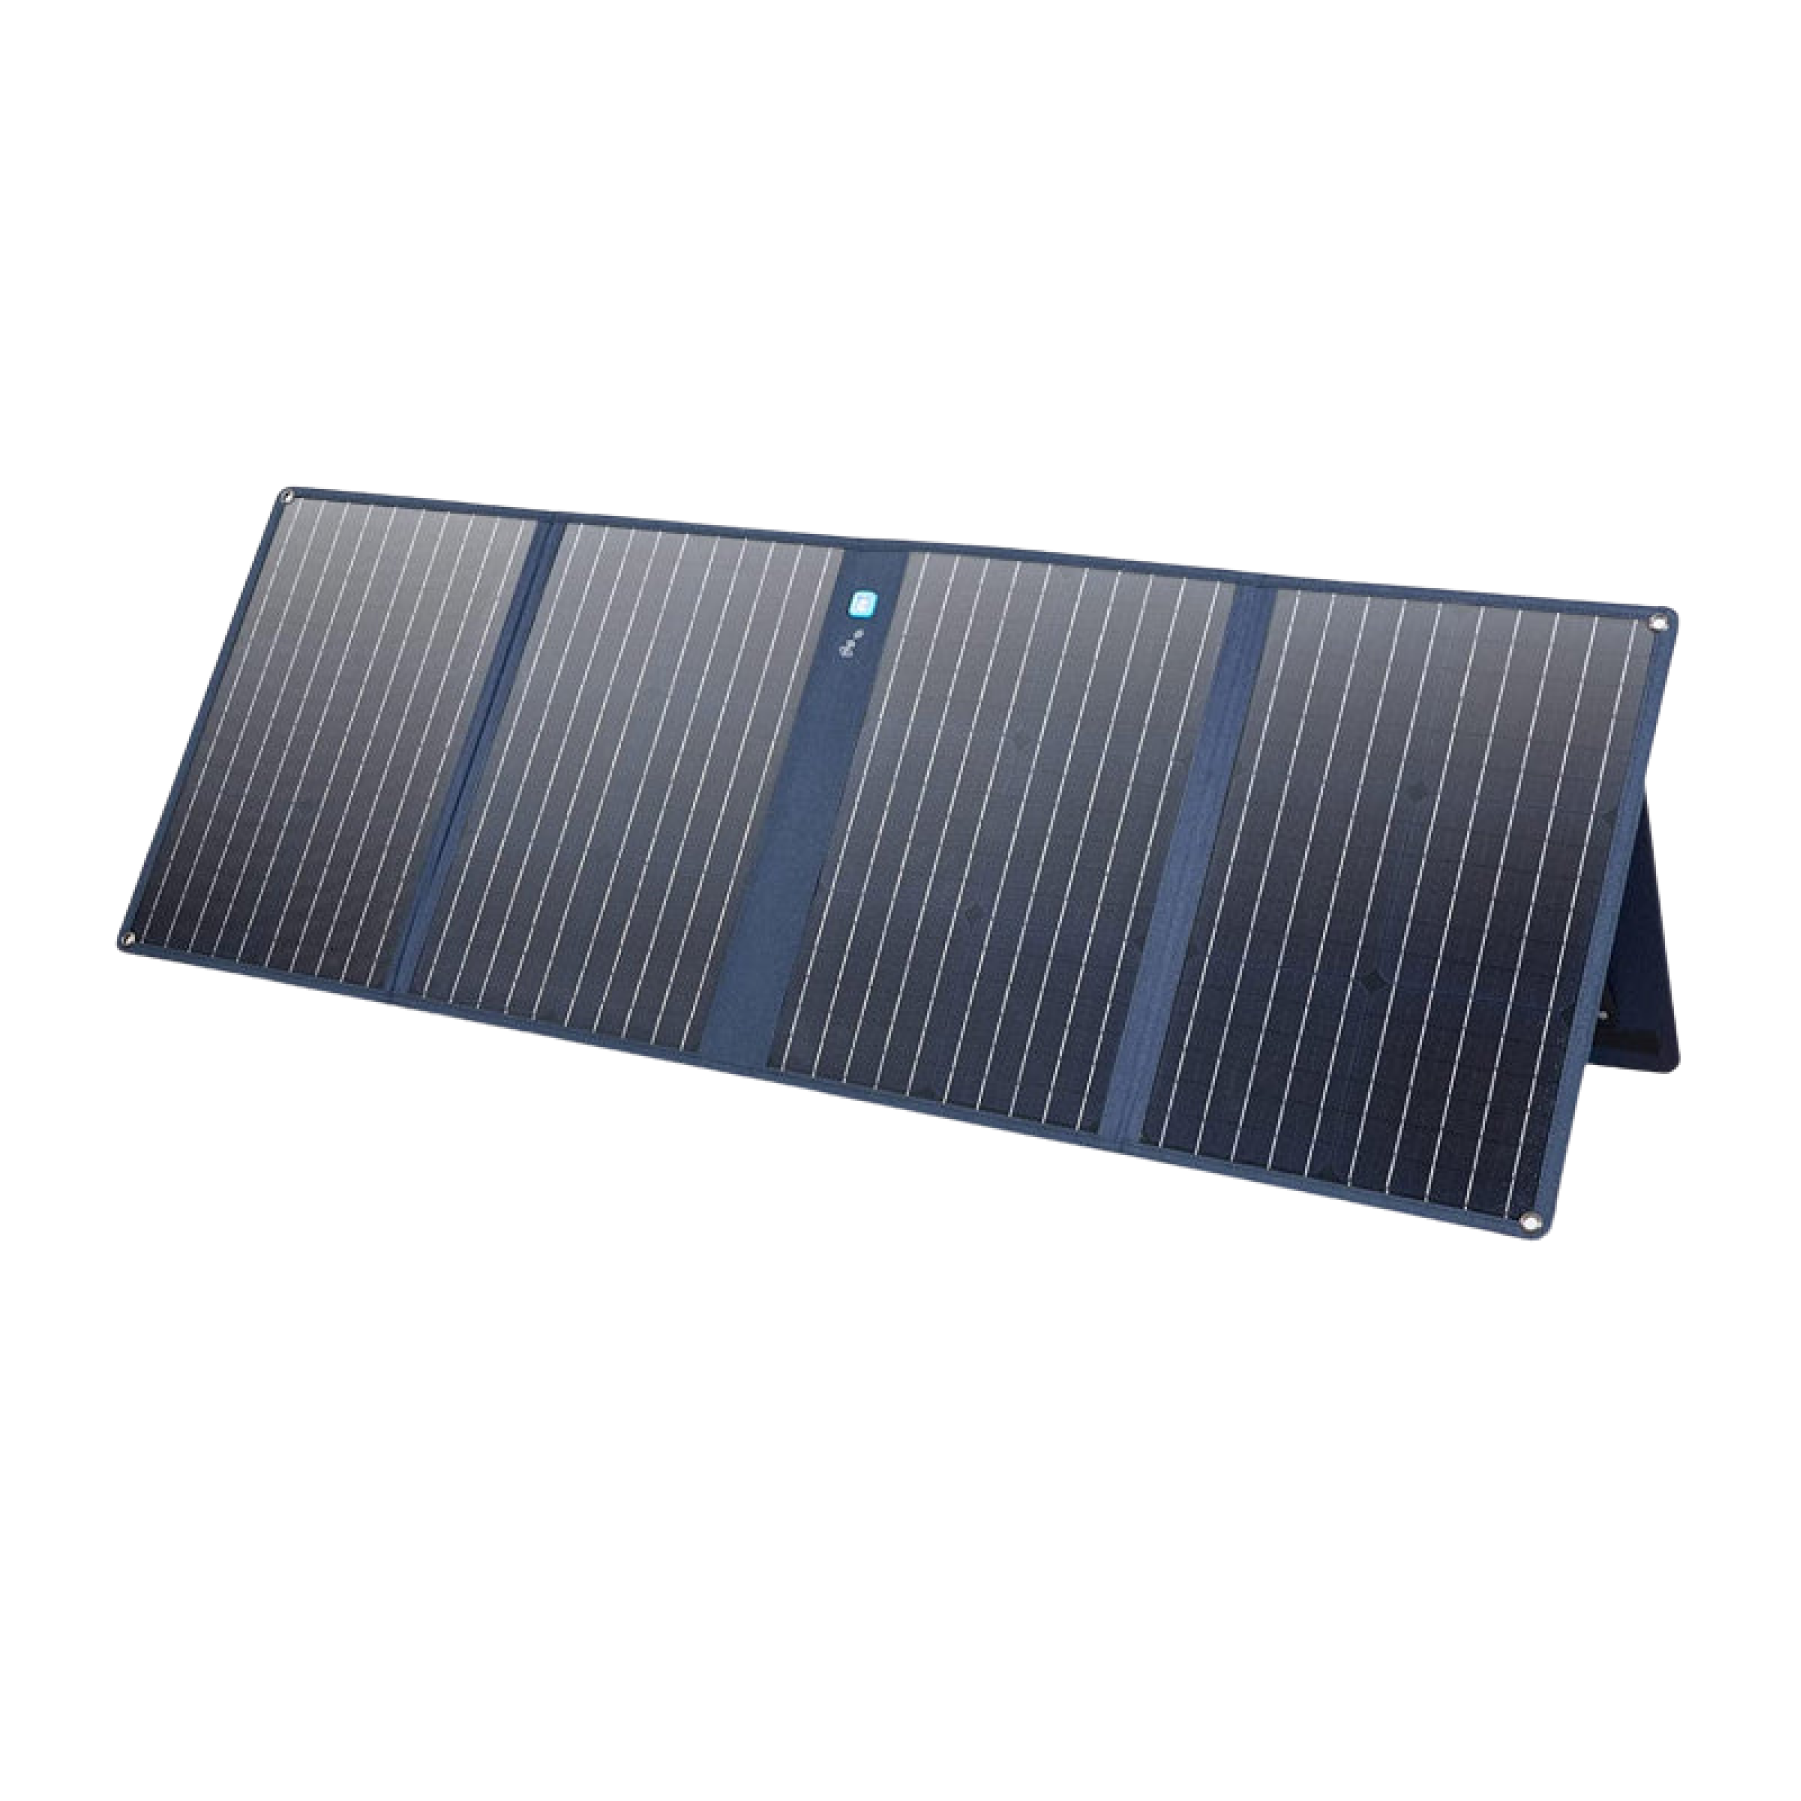 Panel Solar 100 Watt - Distribuidora Solar